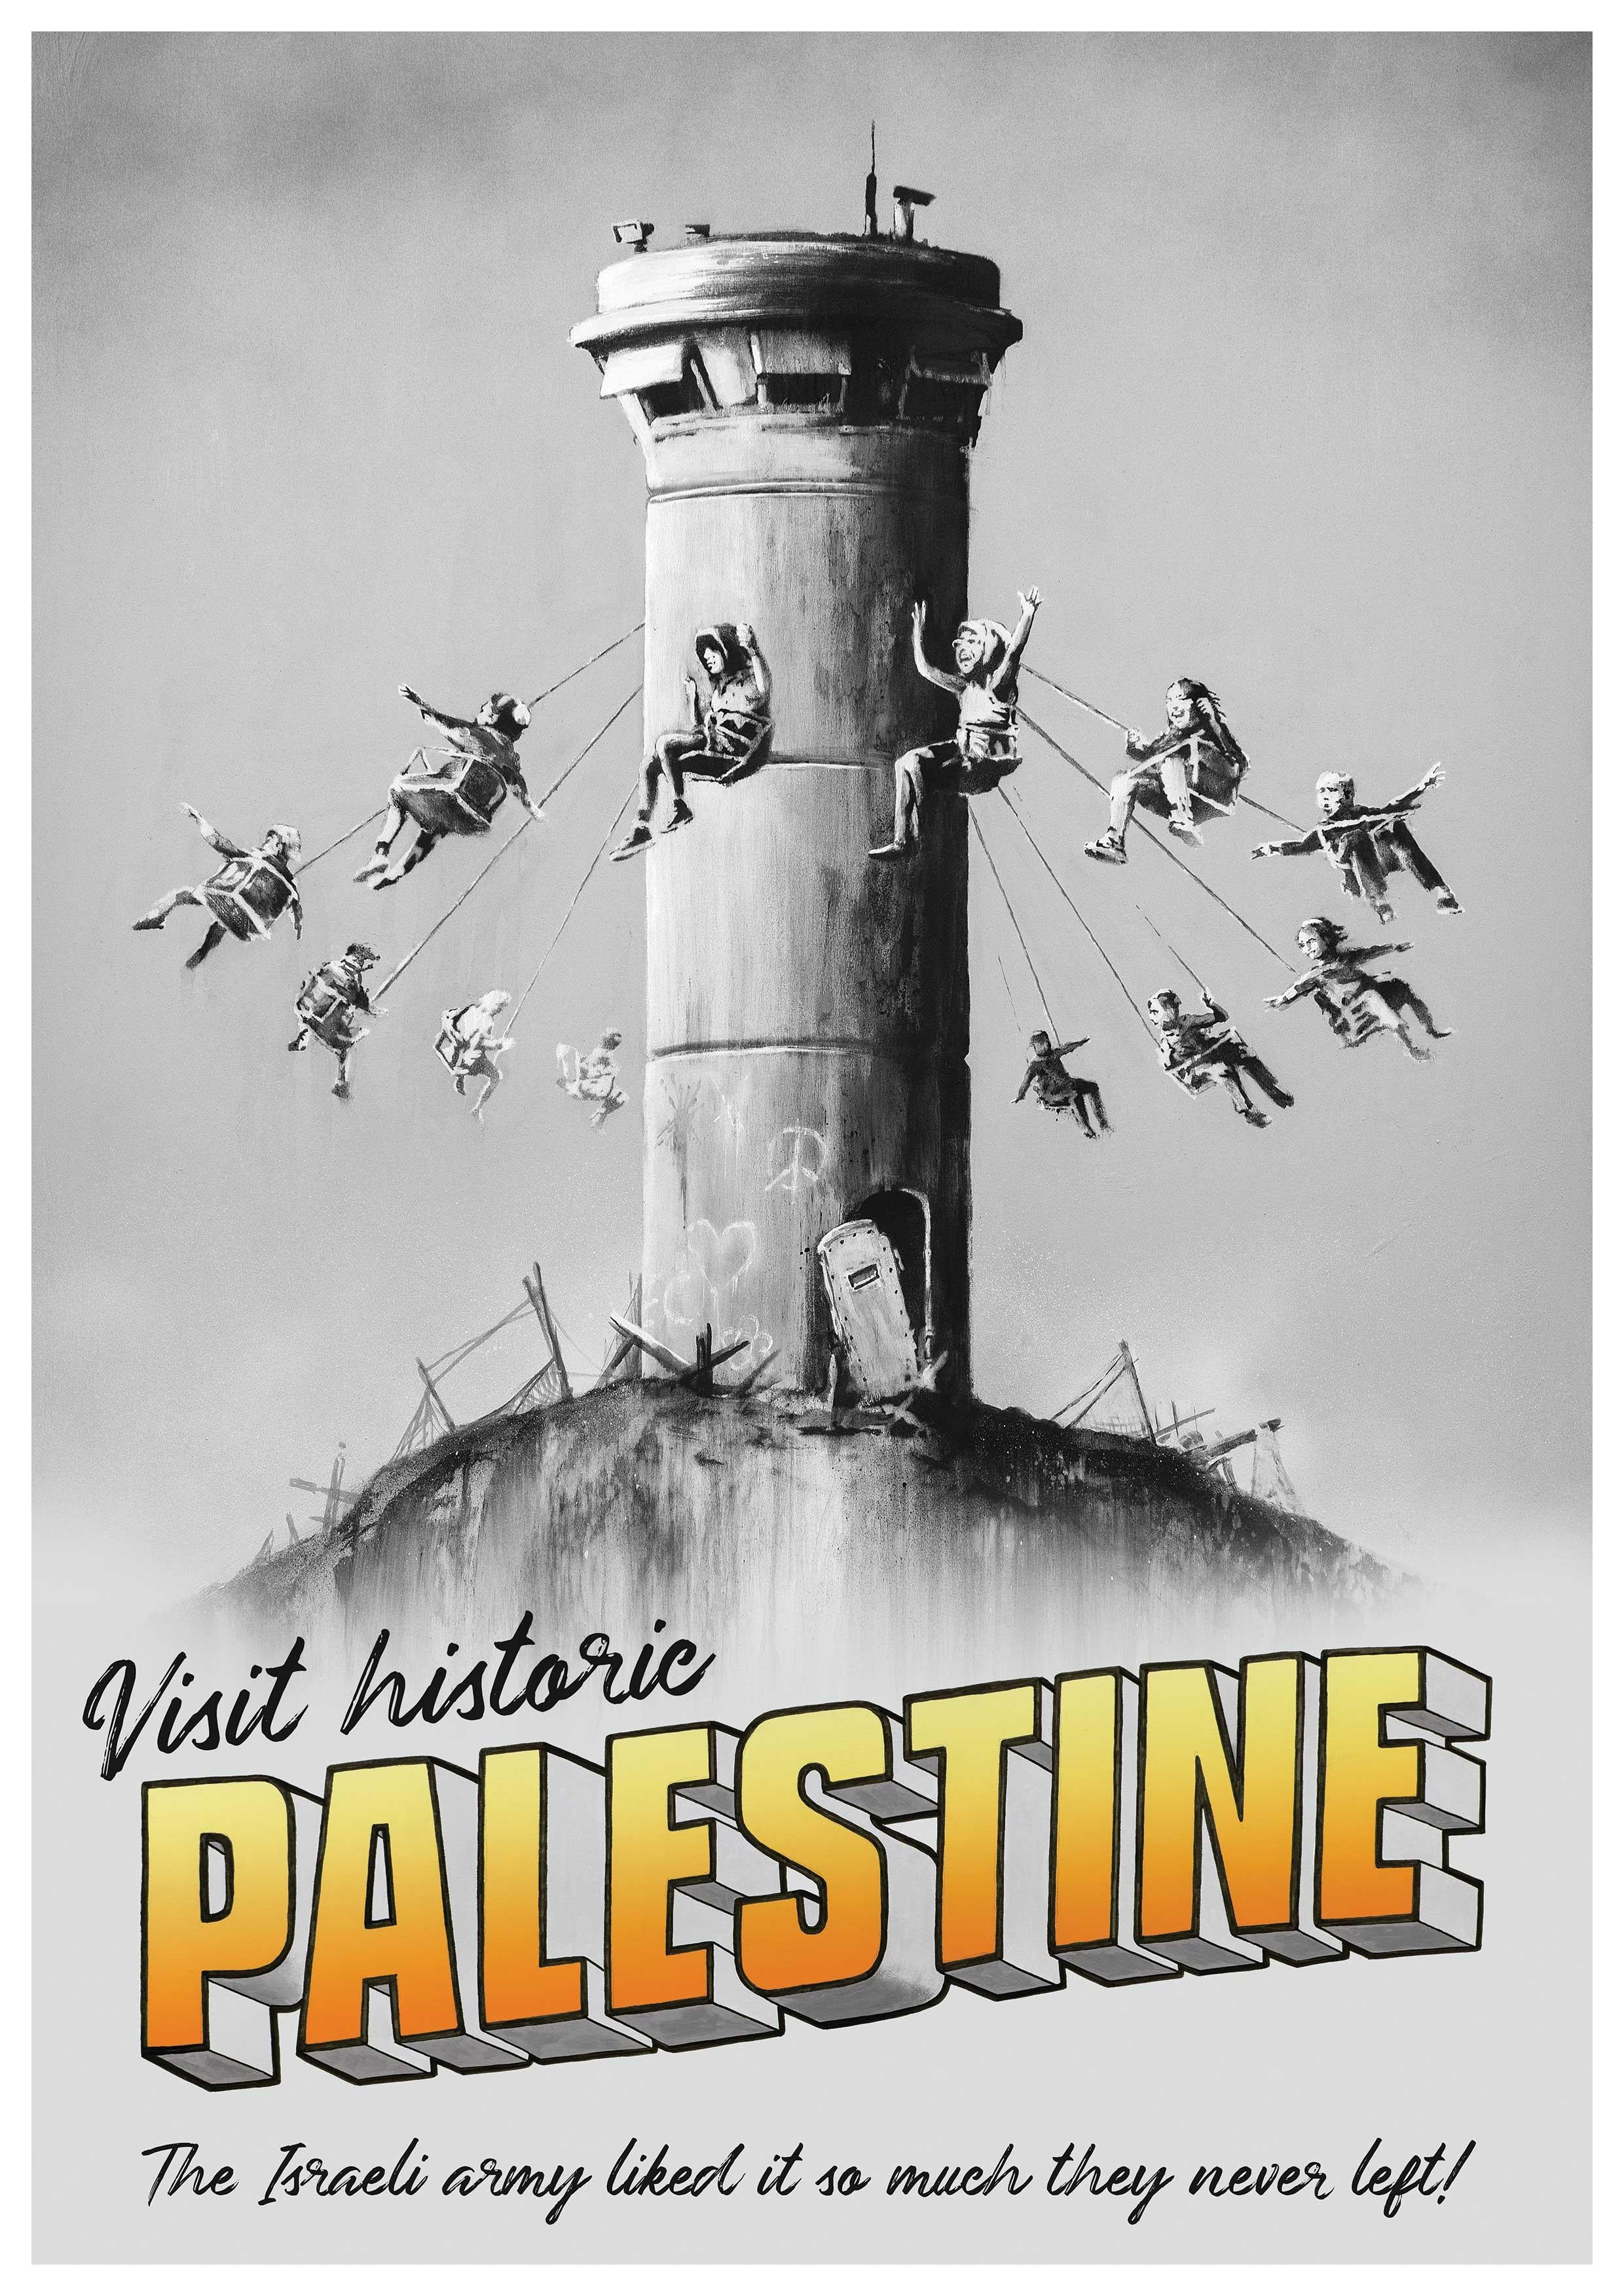 Banksy Interior Print - "Visit Historic Palestine"